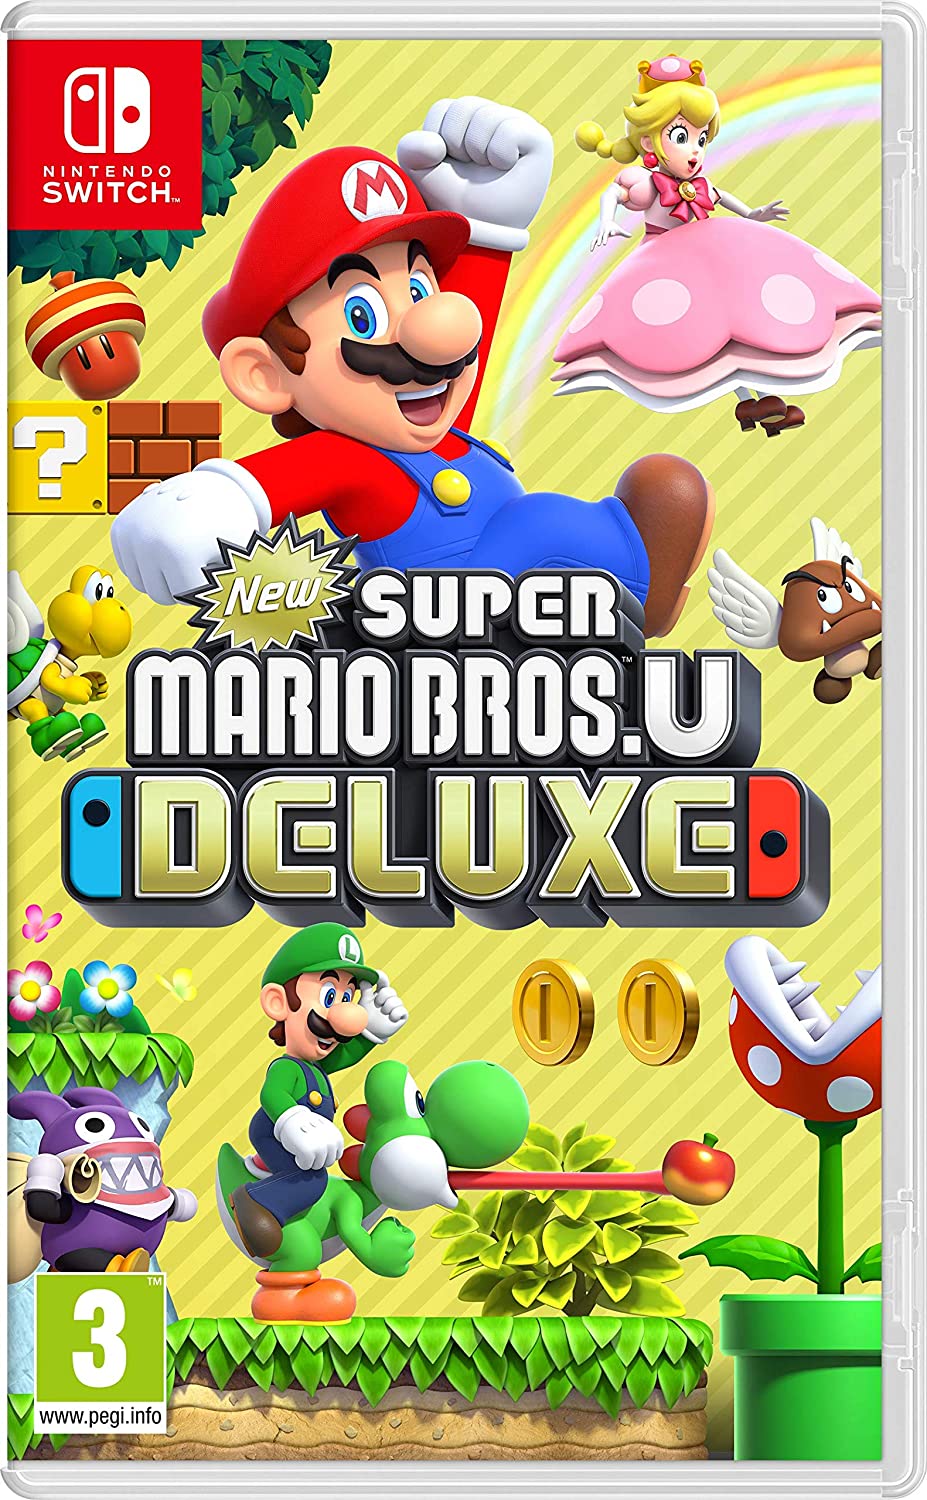 New Super Mario Bros. U Deluxe for Nintendo Switch cover art.